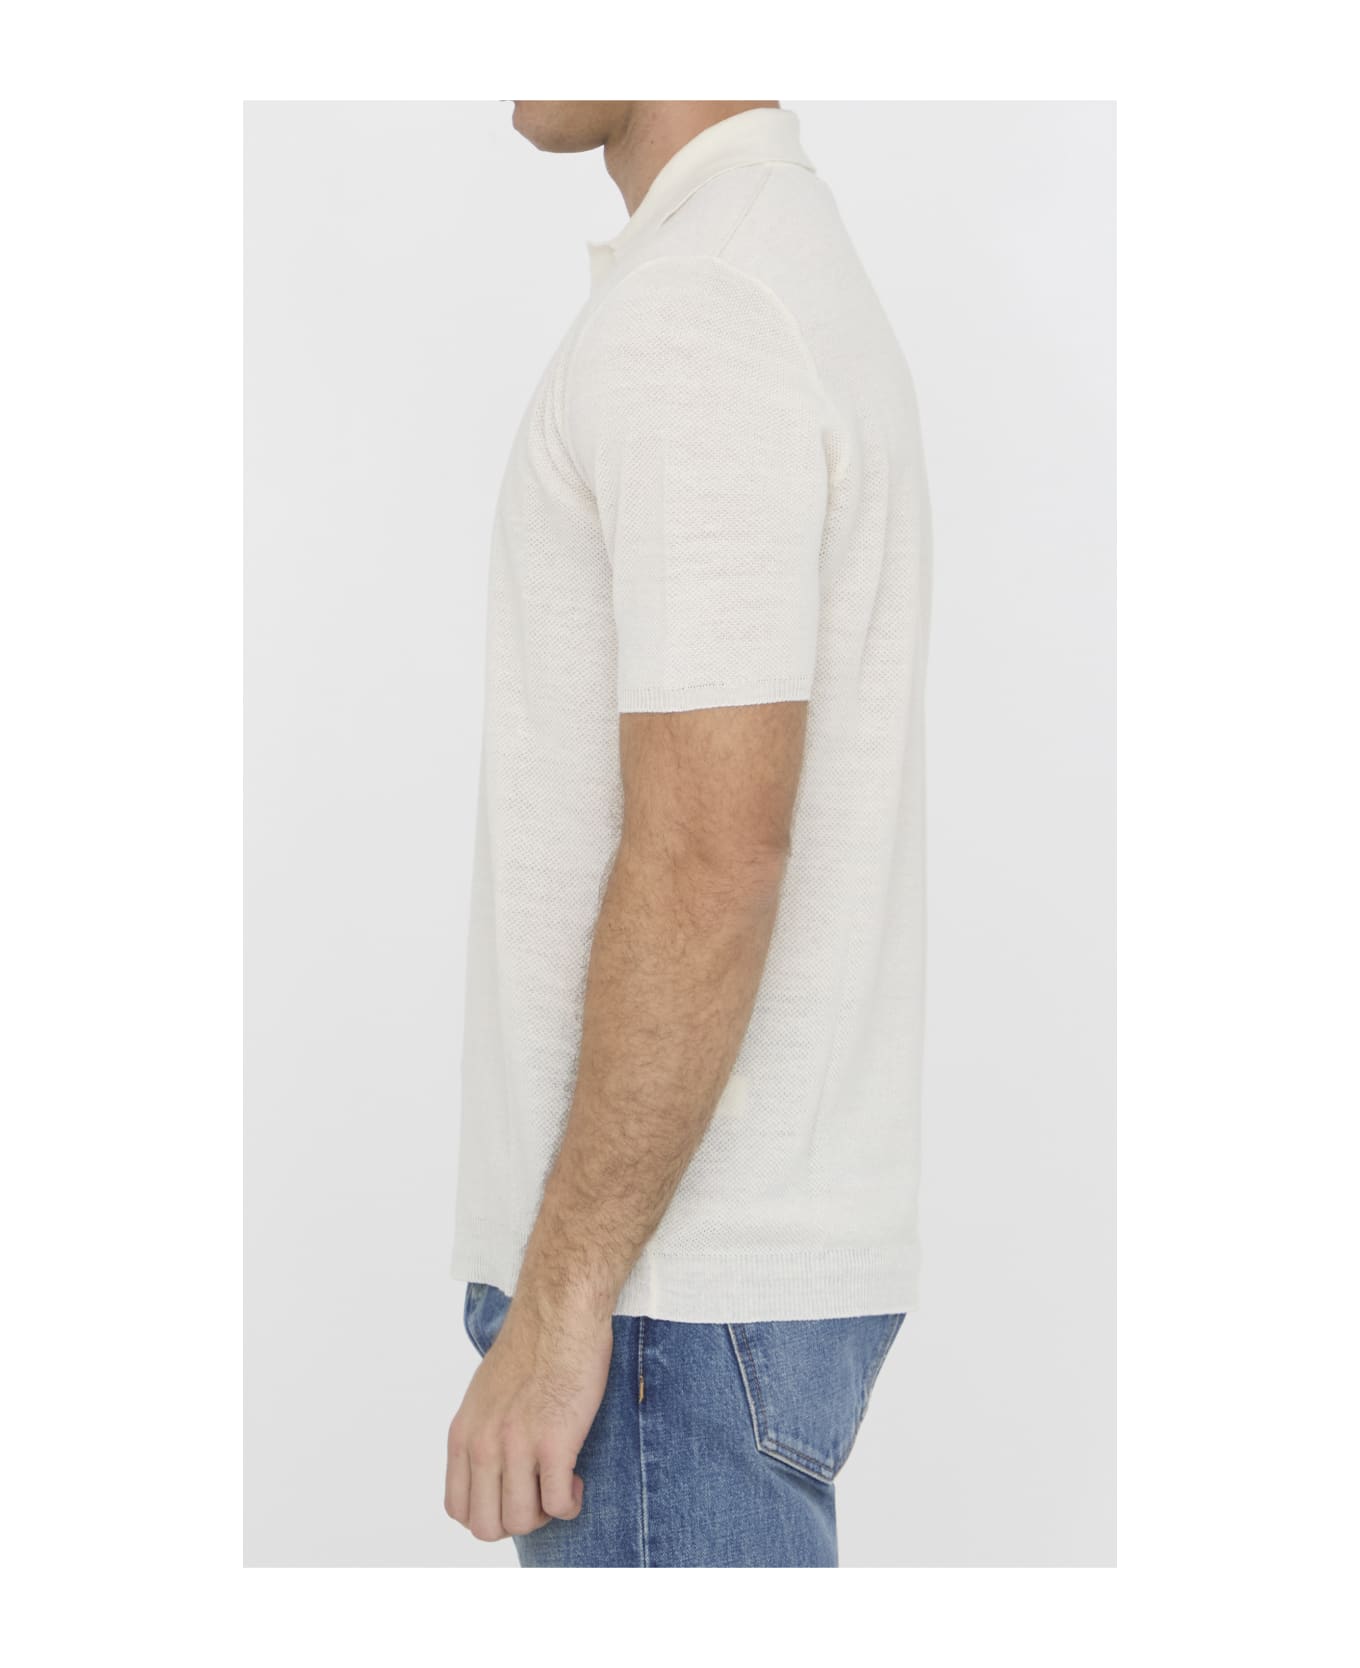 Roberto Collina Linen Polo Shirt - WHITE ポロシャツ